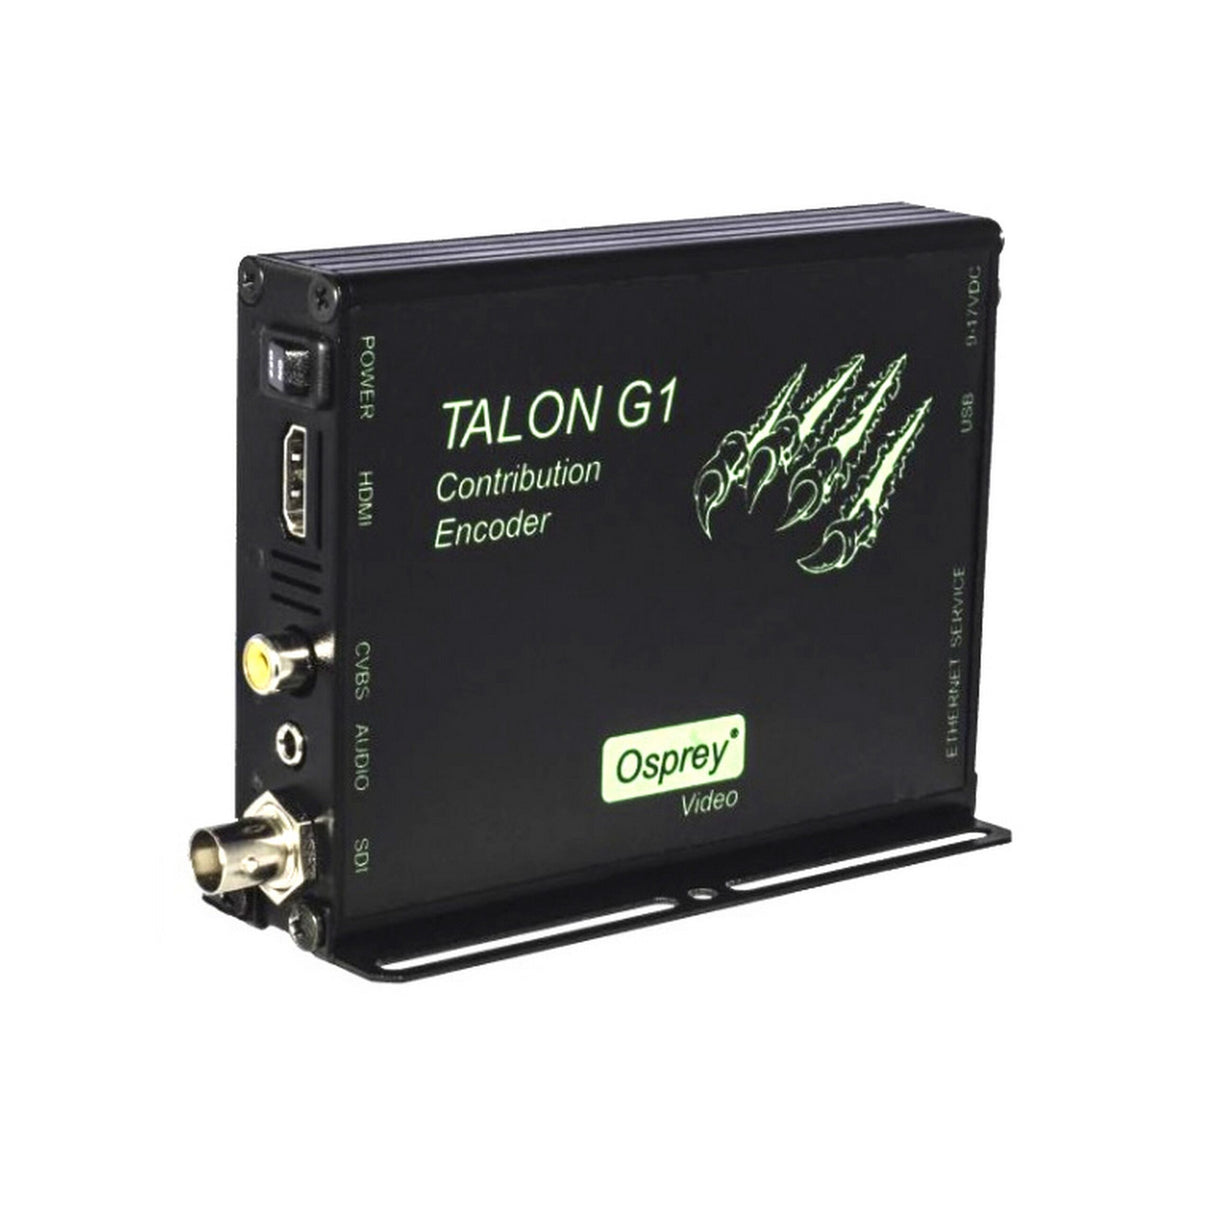 Osprey Video Talon G1 H.264 Encoder